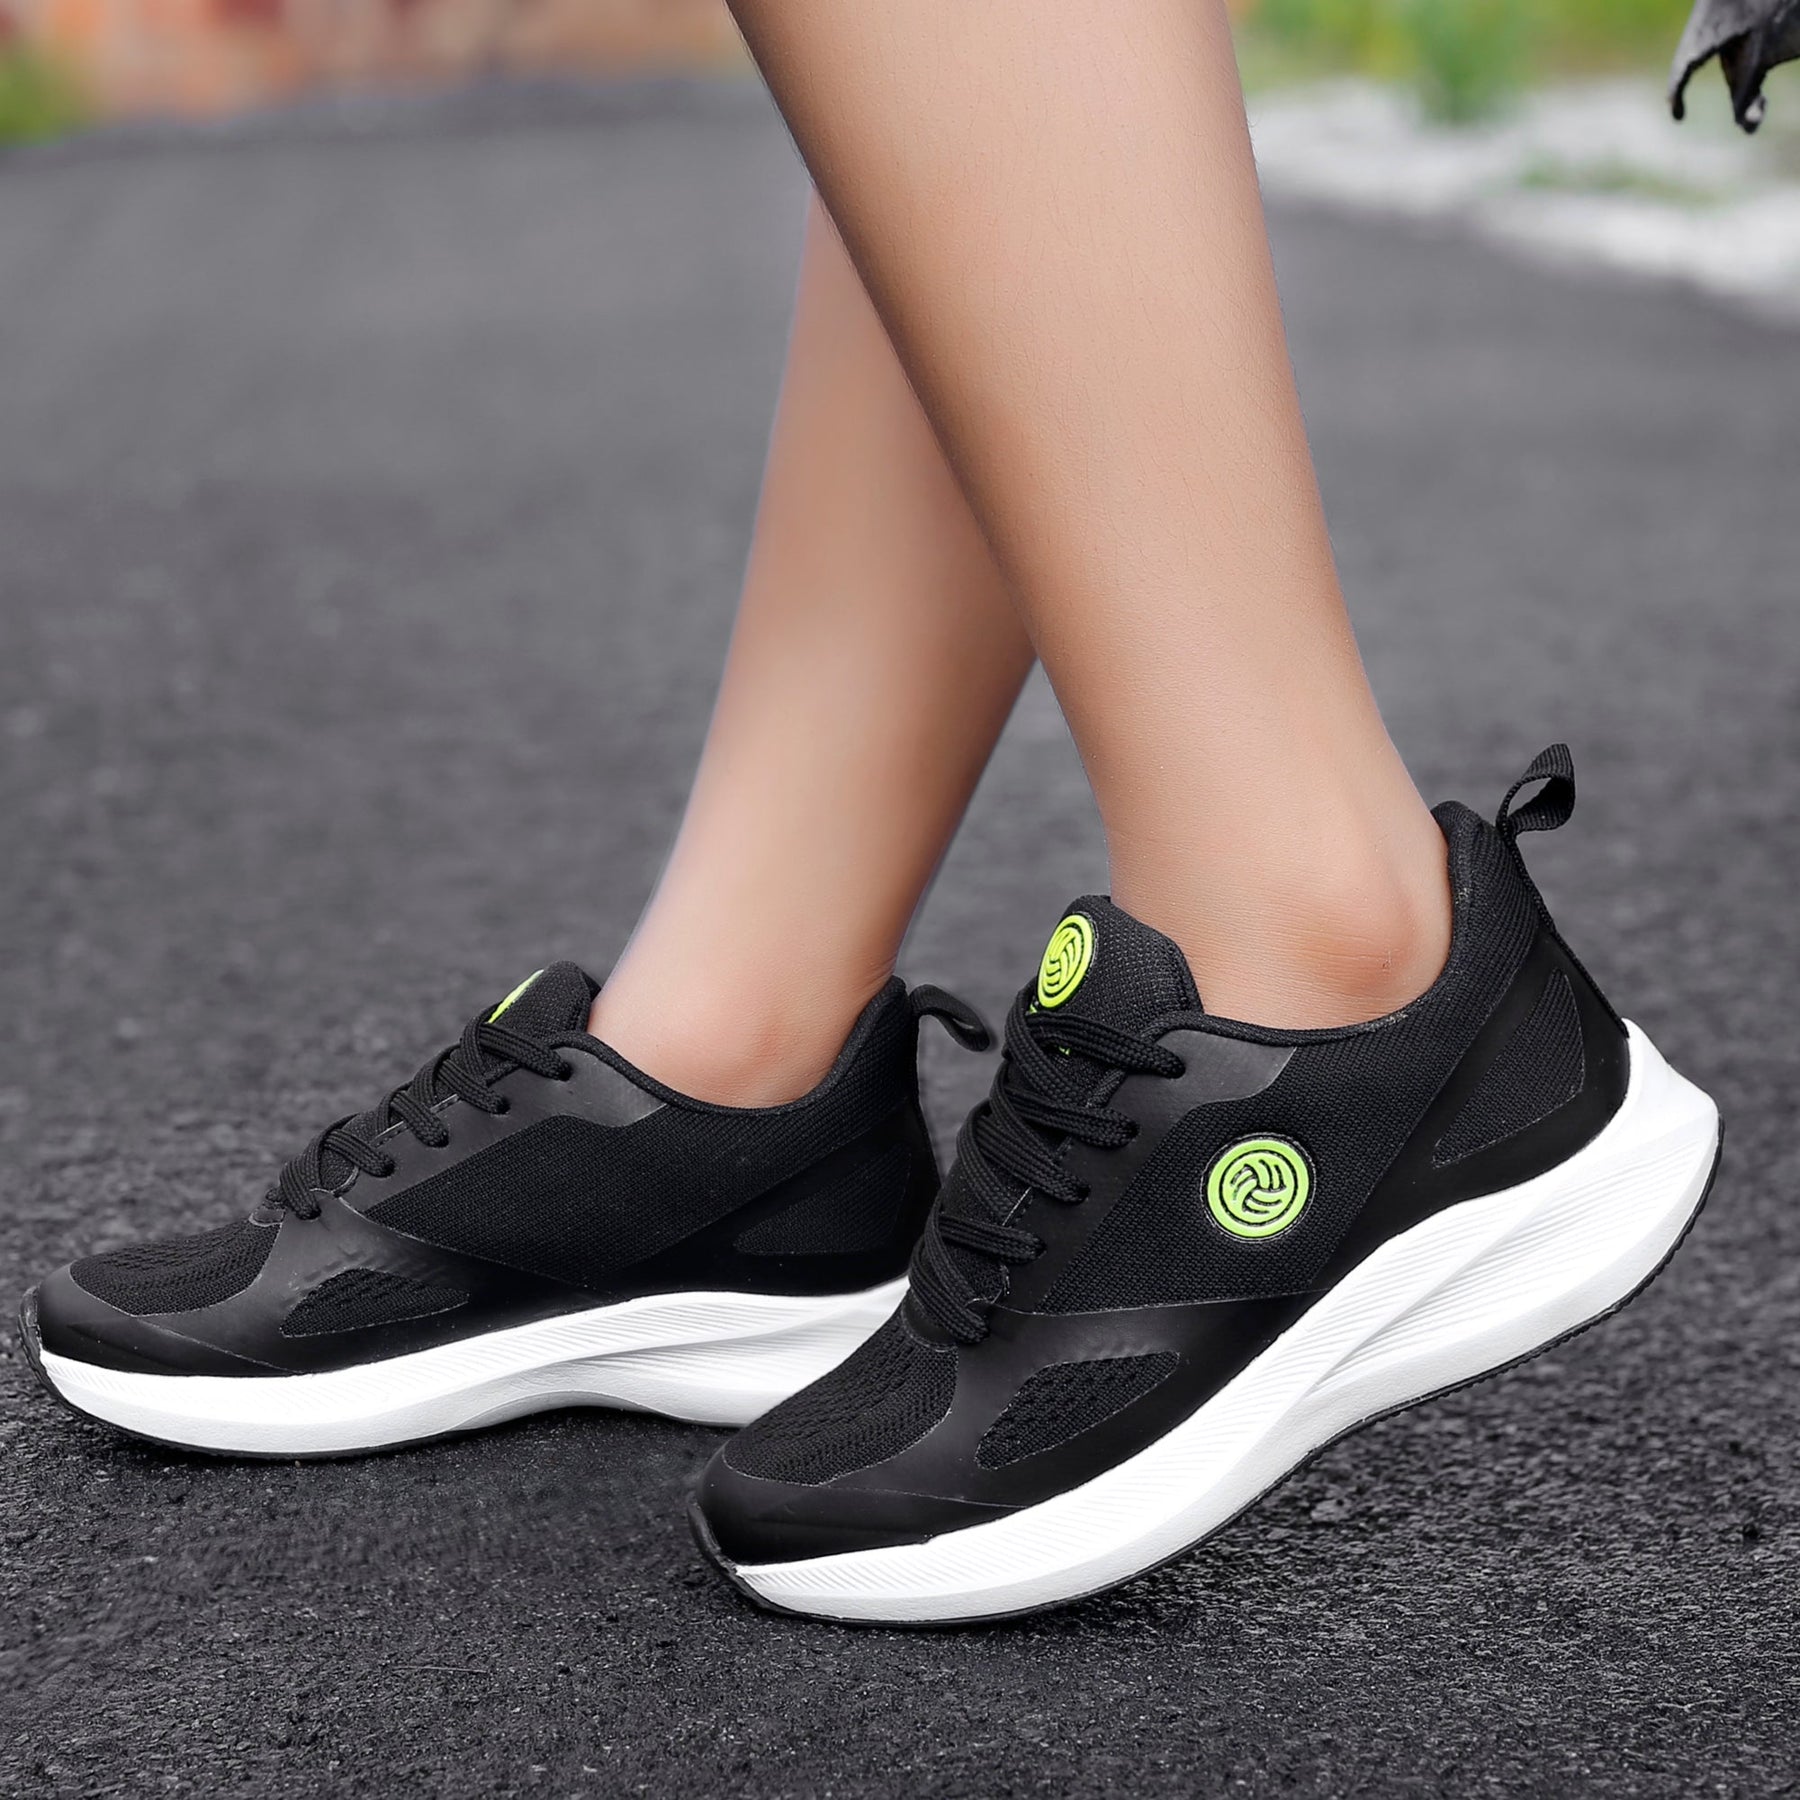 Bacca Bucci Women IMPACT Running Shoes/Sneakers for Running/Gym/Training/Casual Walking Sports Shoes